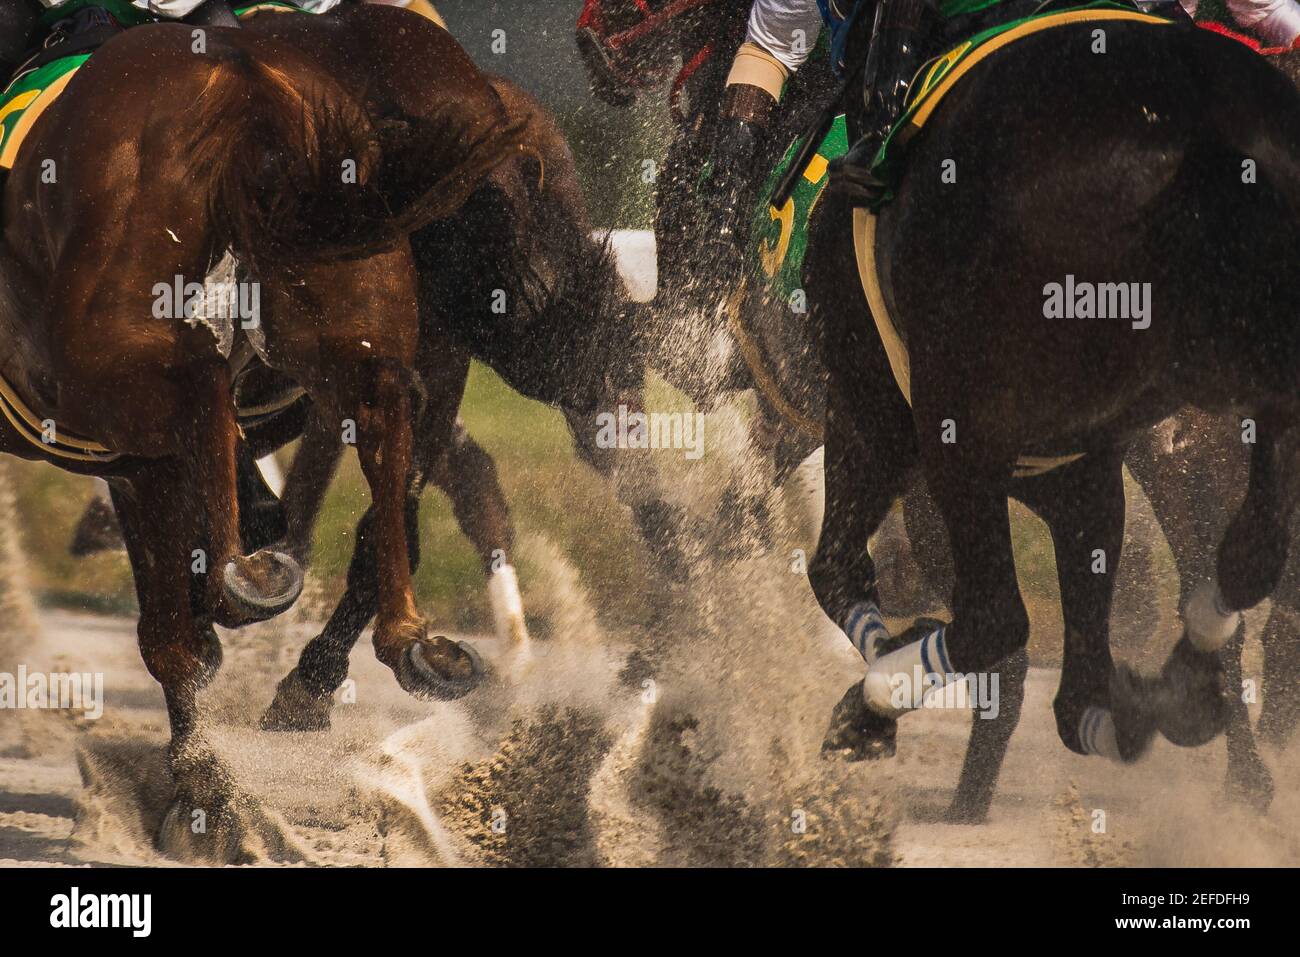 carreras de caballos competitivas en una tormenta de arena pesada. Foto de stock